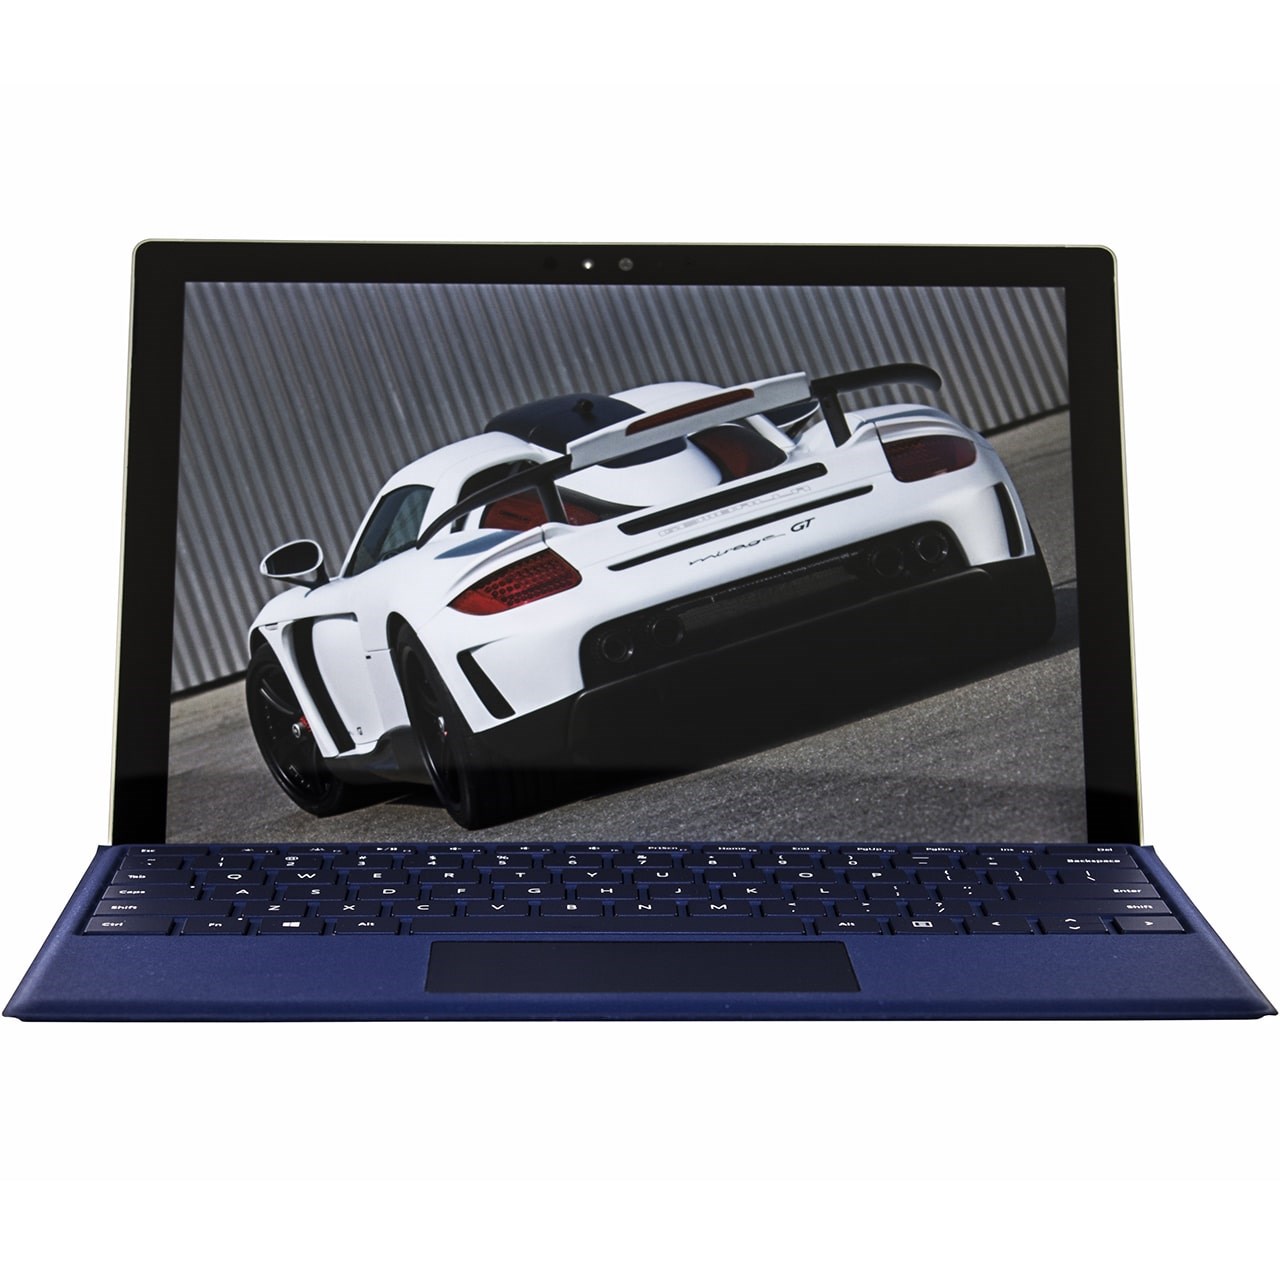 تبلت مایکروسافت مدل Surface Pro 4 - D به همراه کیبورد سرمه ای Dark Blue Type Cover و کیف Golden Guard - ظرفیت 256 گیگابایت